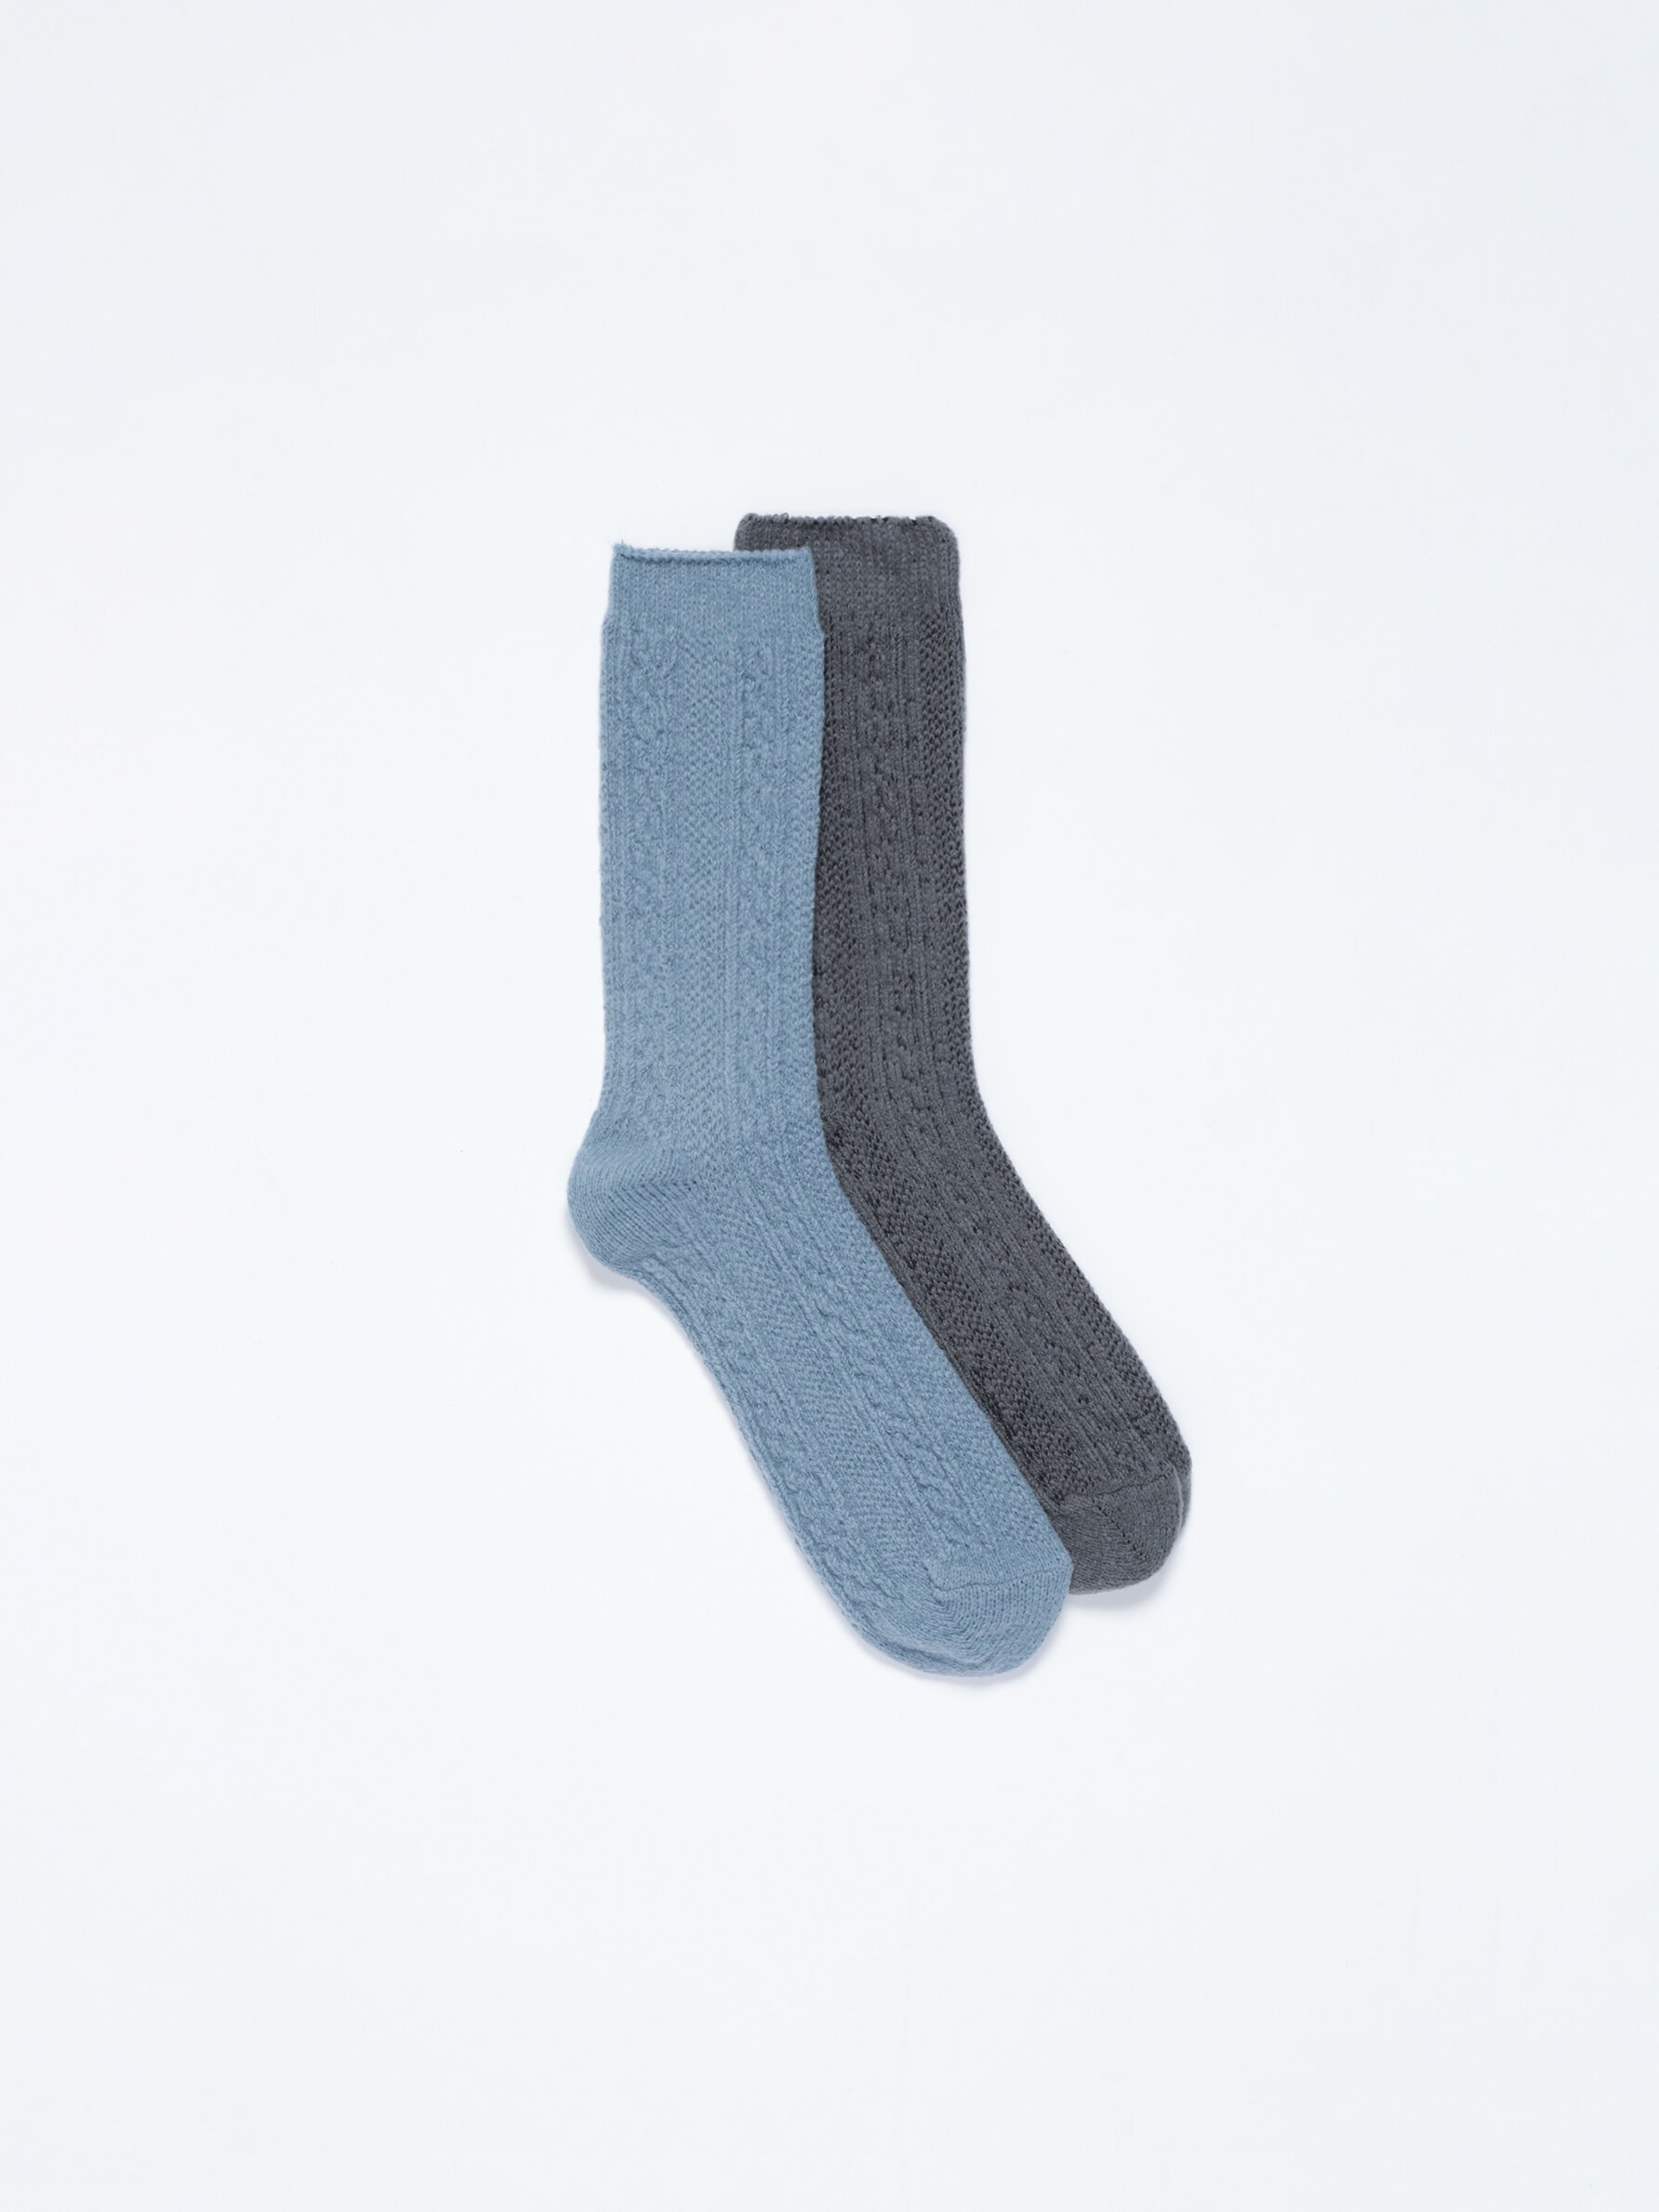 Uniqlo, Underwear & Socks